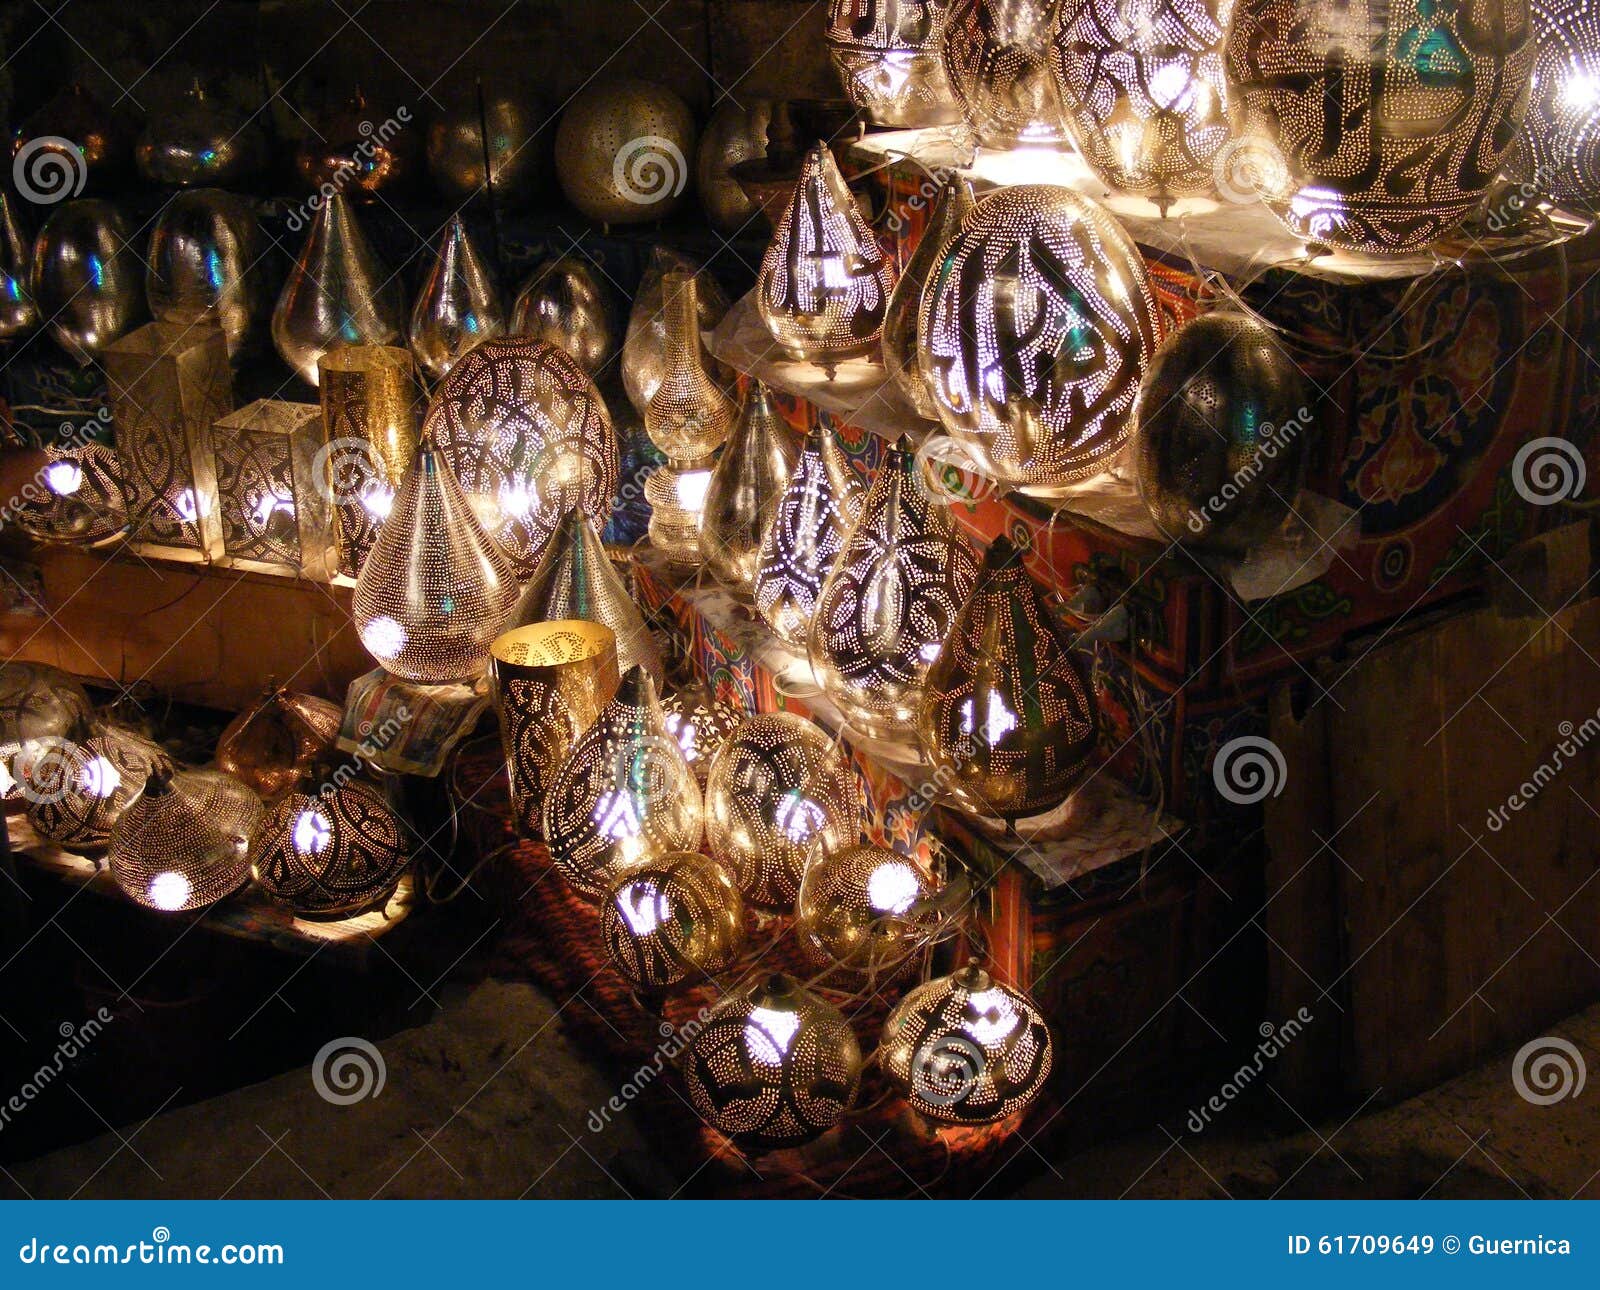 amazing shining lanterns in khan el khalili souq market with arabic handwriting on it in egypt cairo